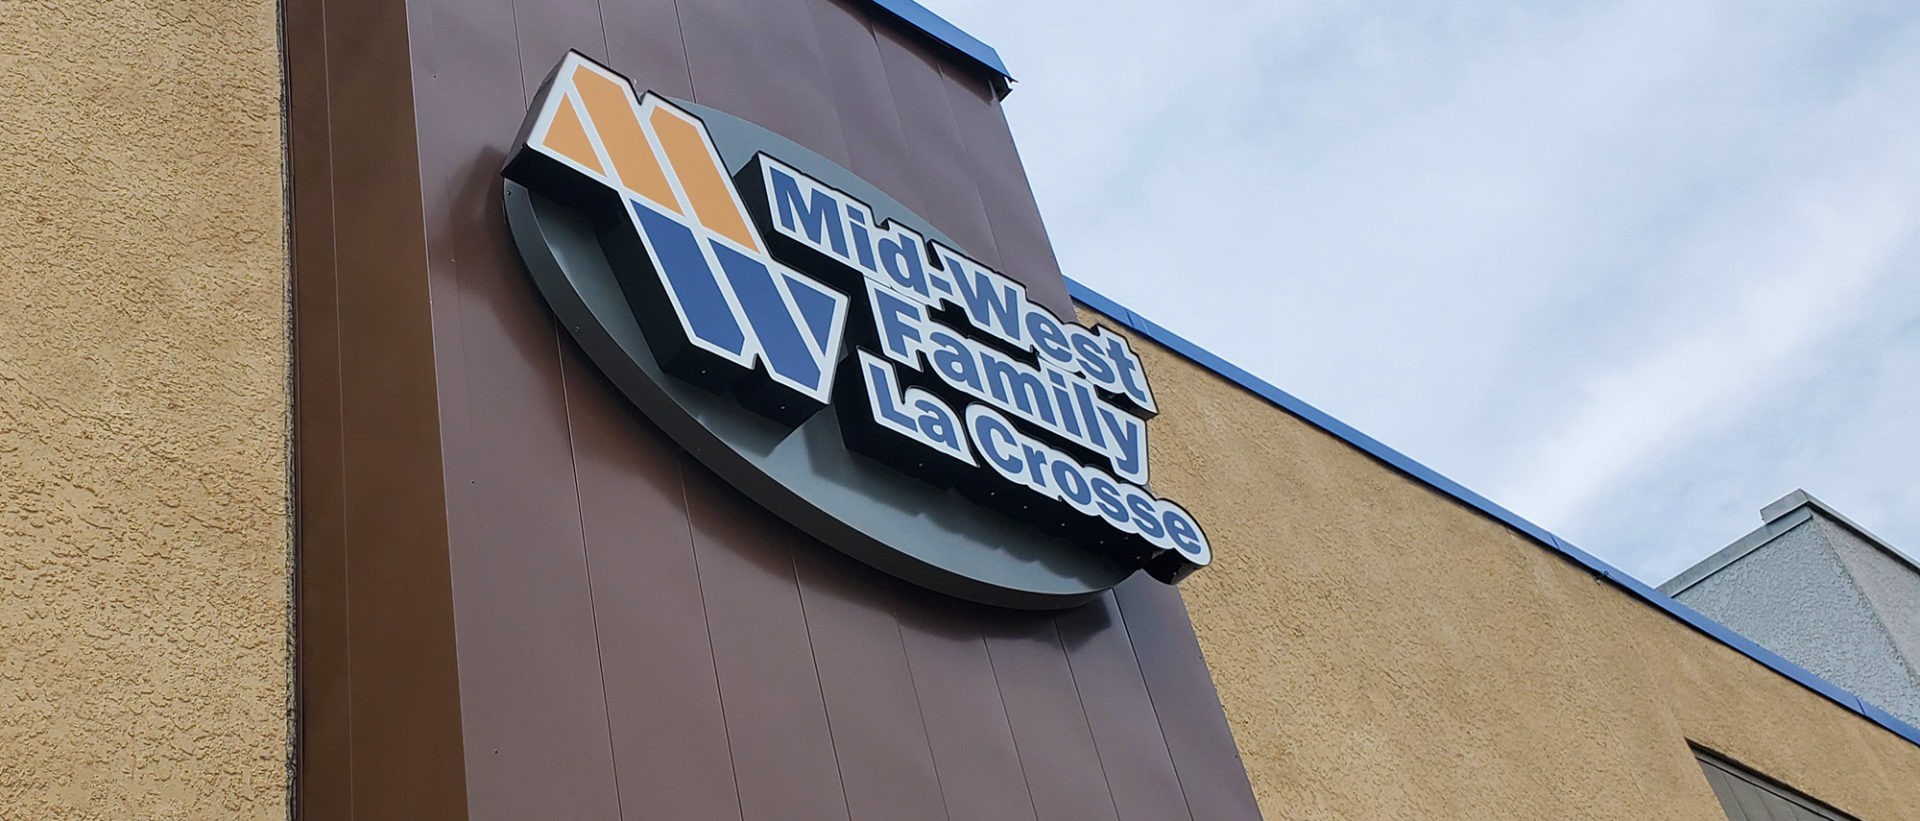 Mid-West Family La Crosse building logo